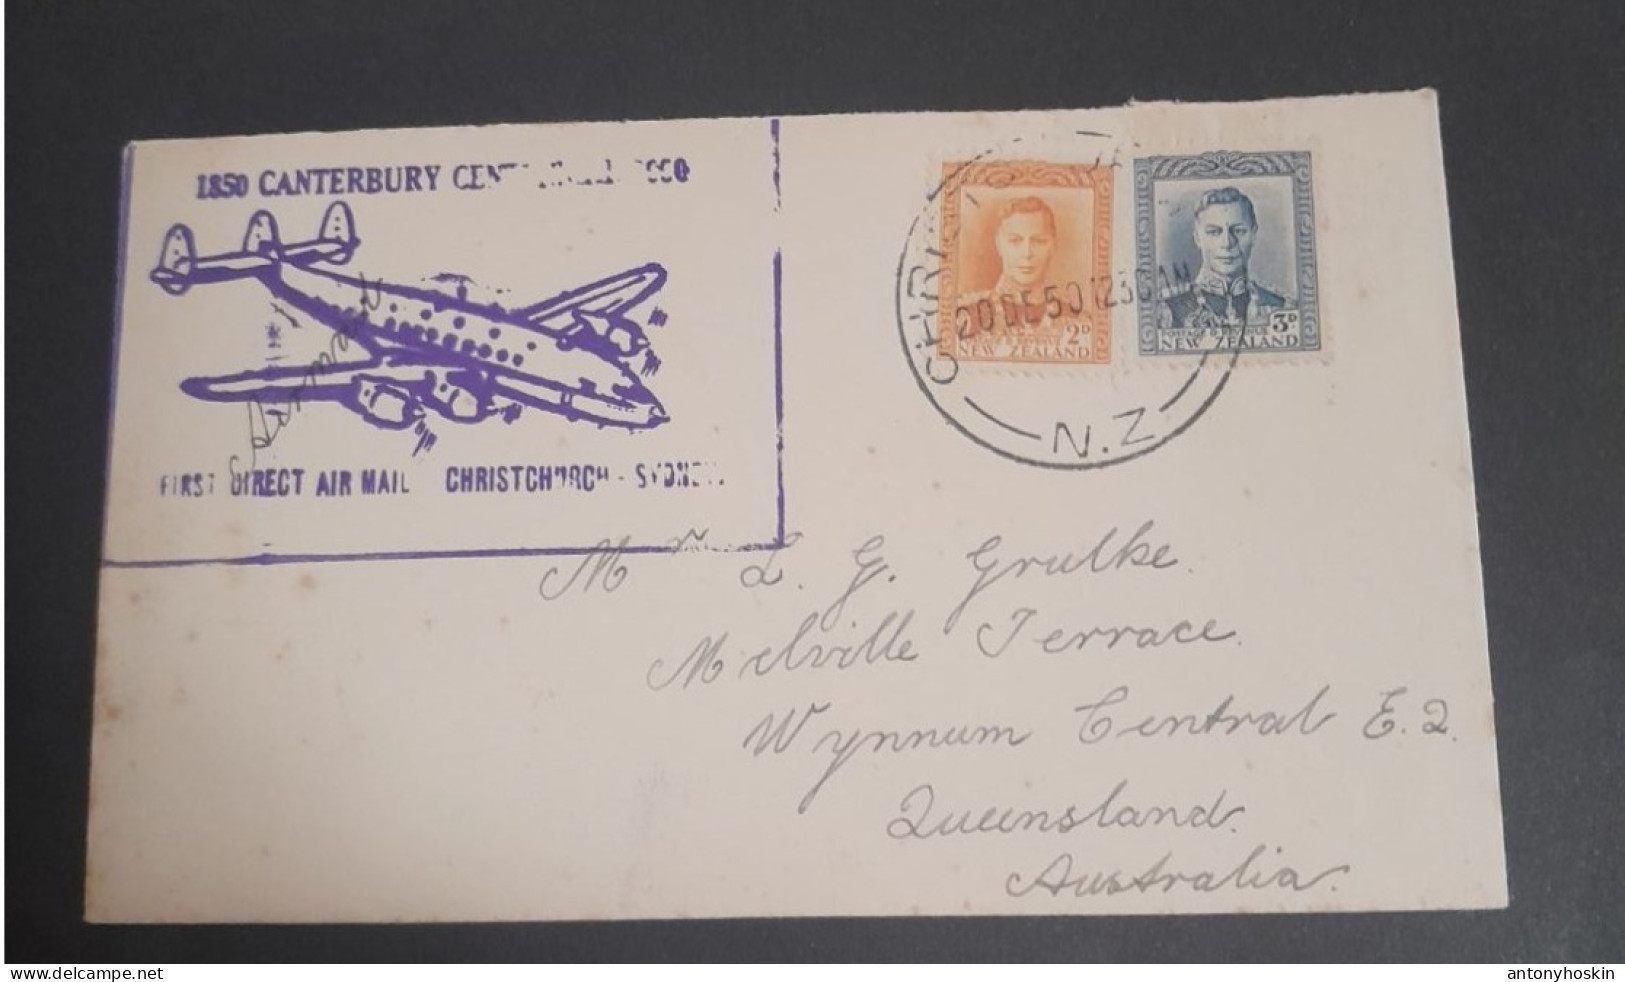 20 Dec 1950 First Direct Air Mail Christchurch -Sydney - Posta Aerea